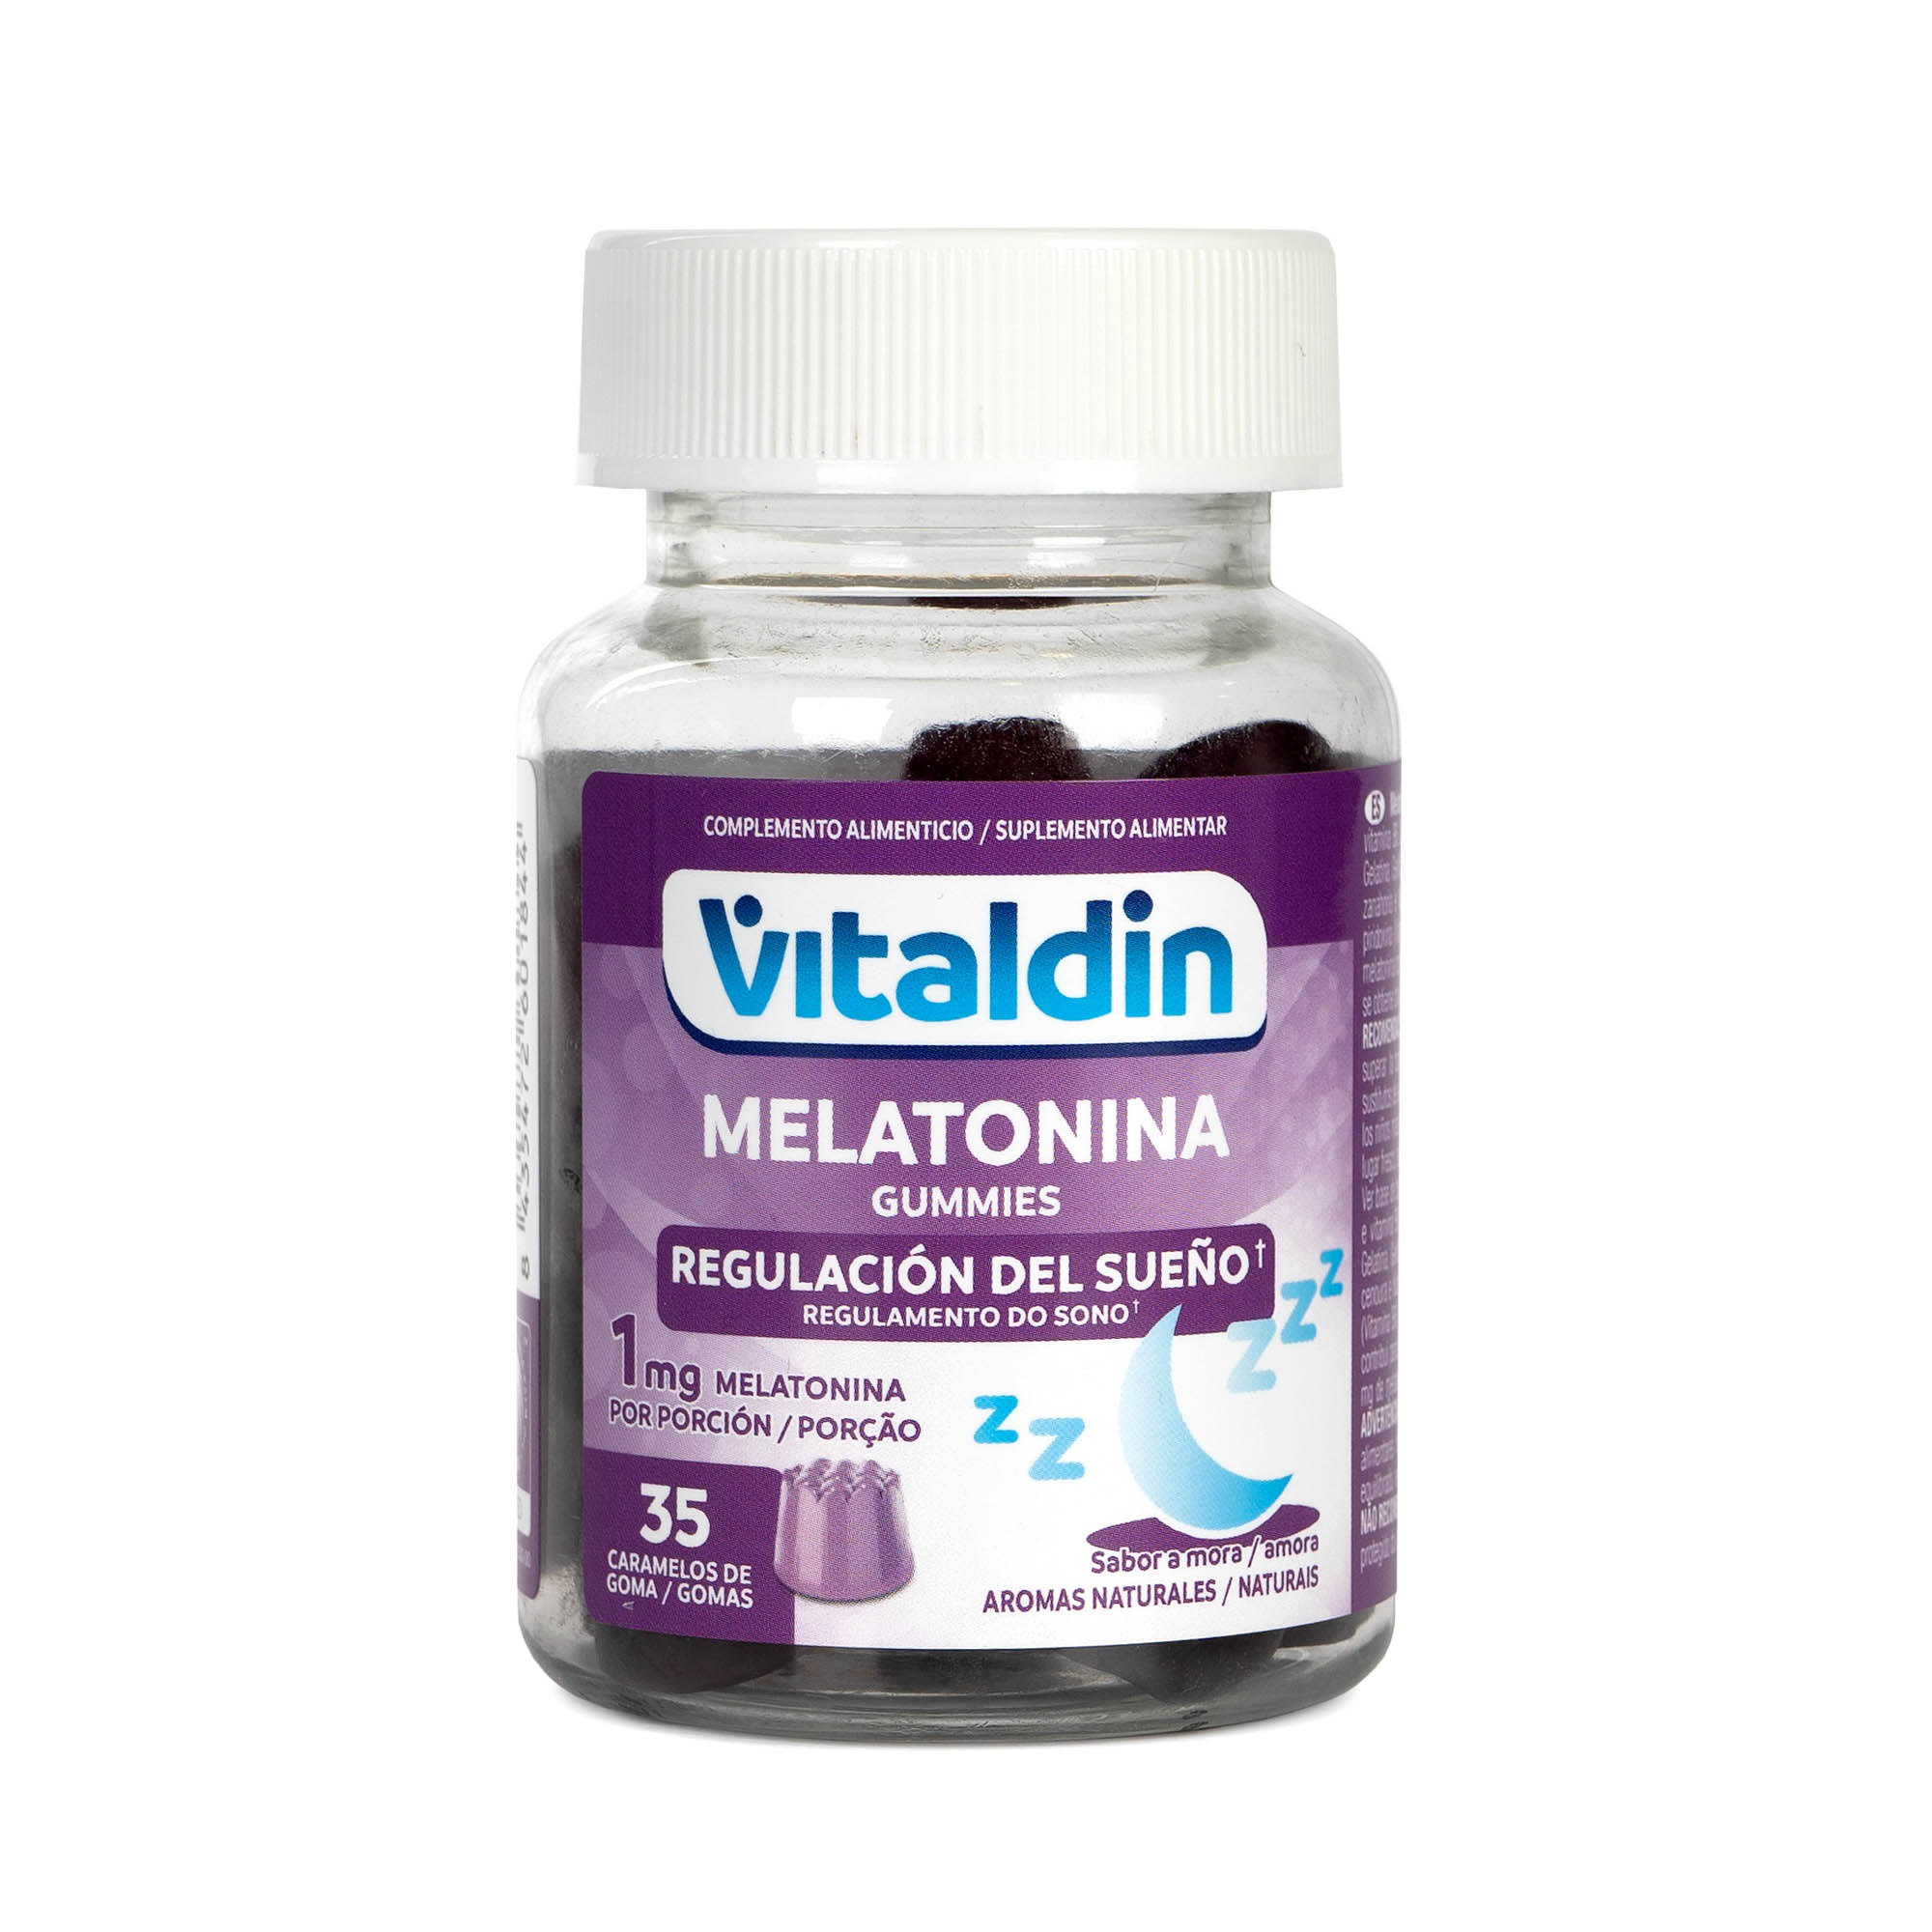 Gominolas melatonina para dormir Vitaldin